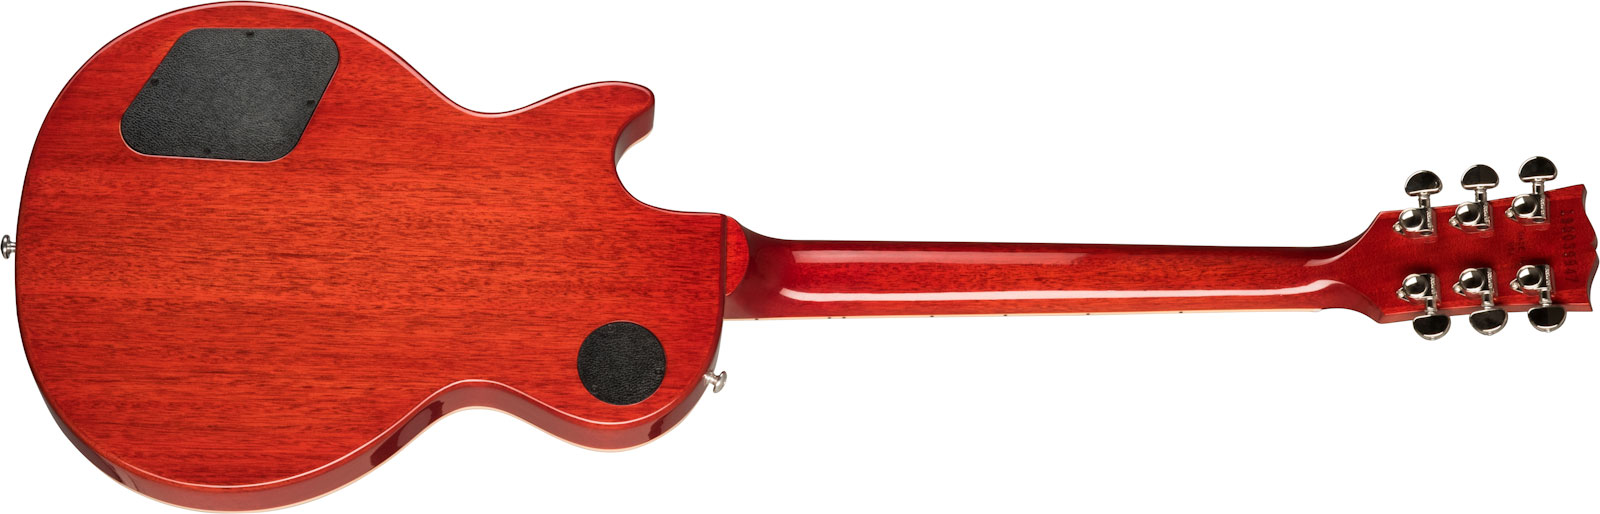 Gibson Les Paul Classic Modern 2h Ht Rw - Trans Cherry - Enkel gesneden elektrische gitaar - Variation 1